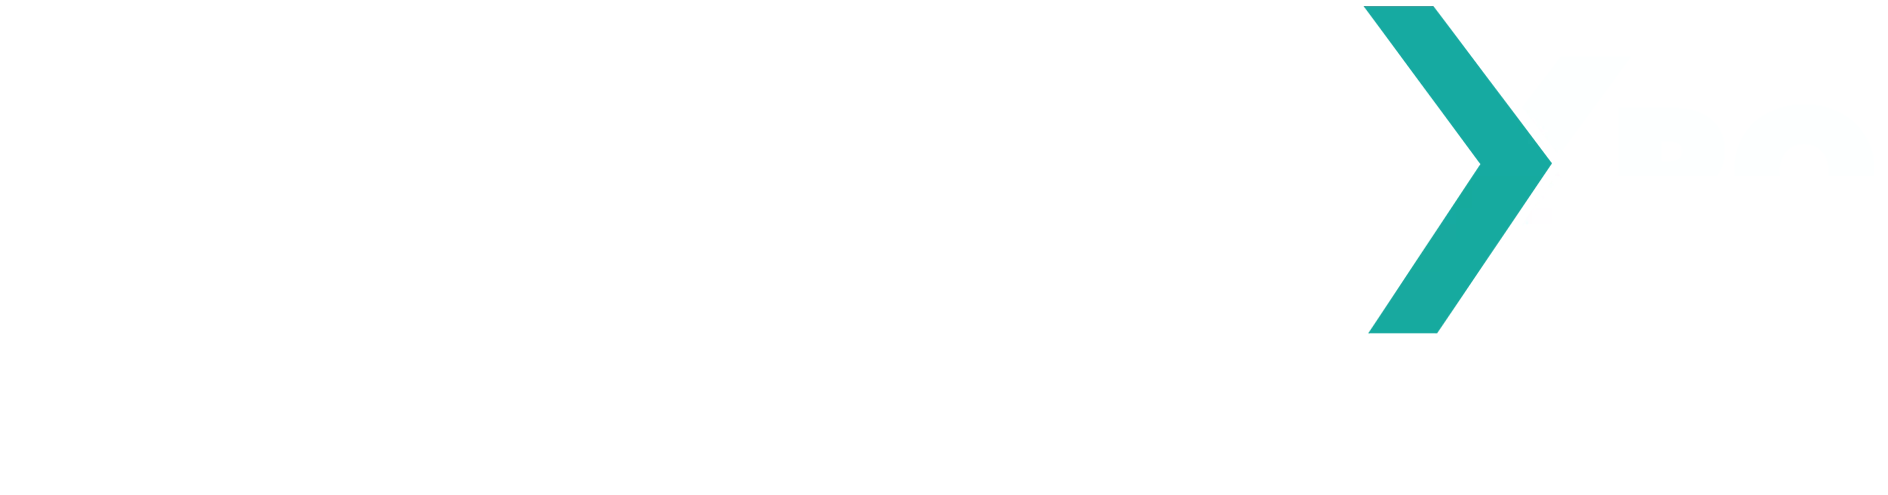 logo-icw-build-xpo-new